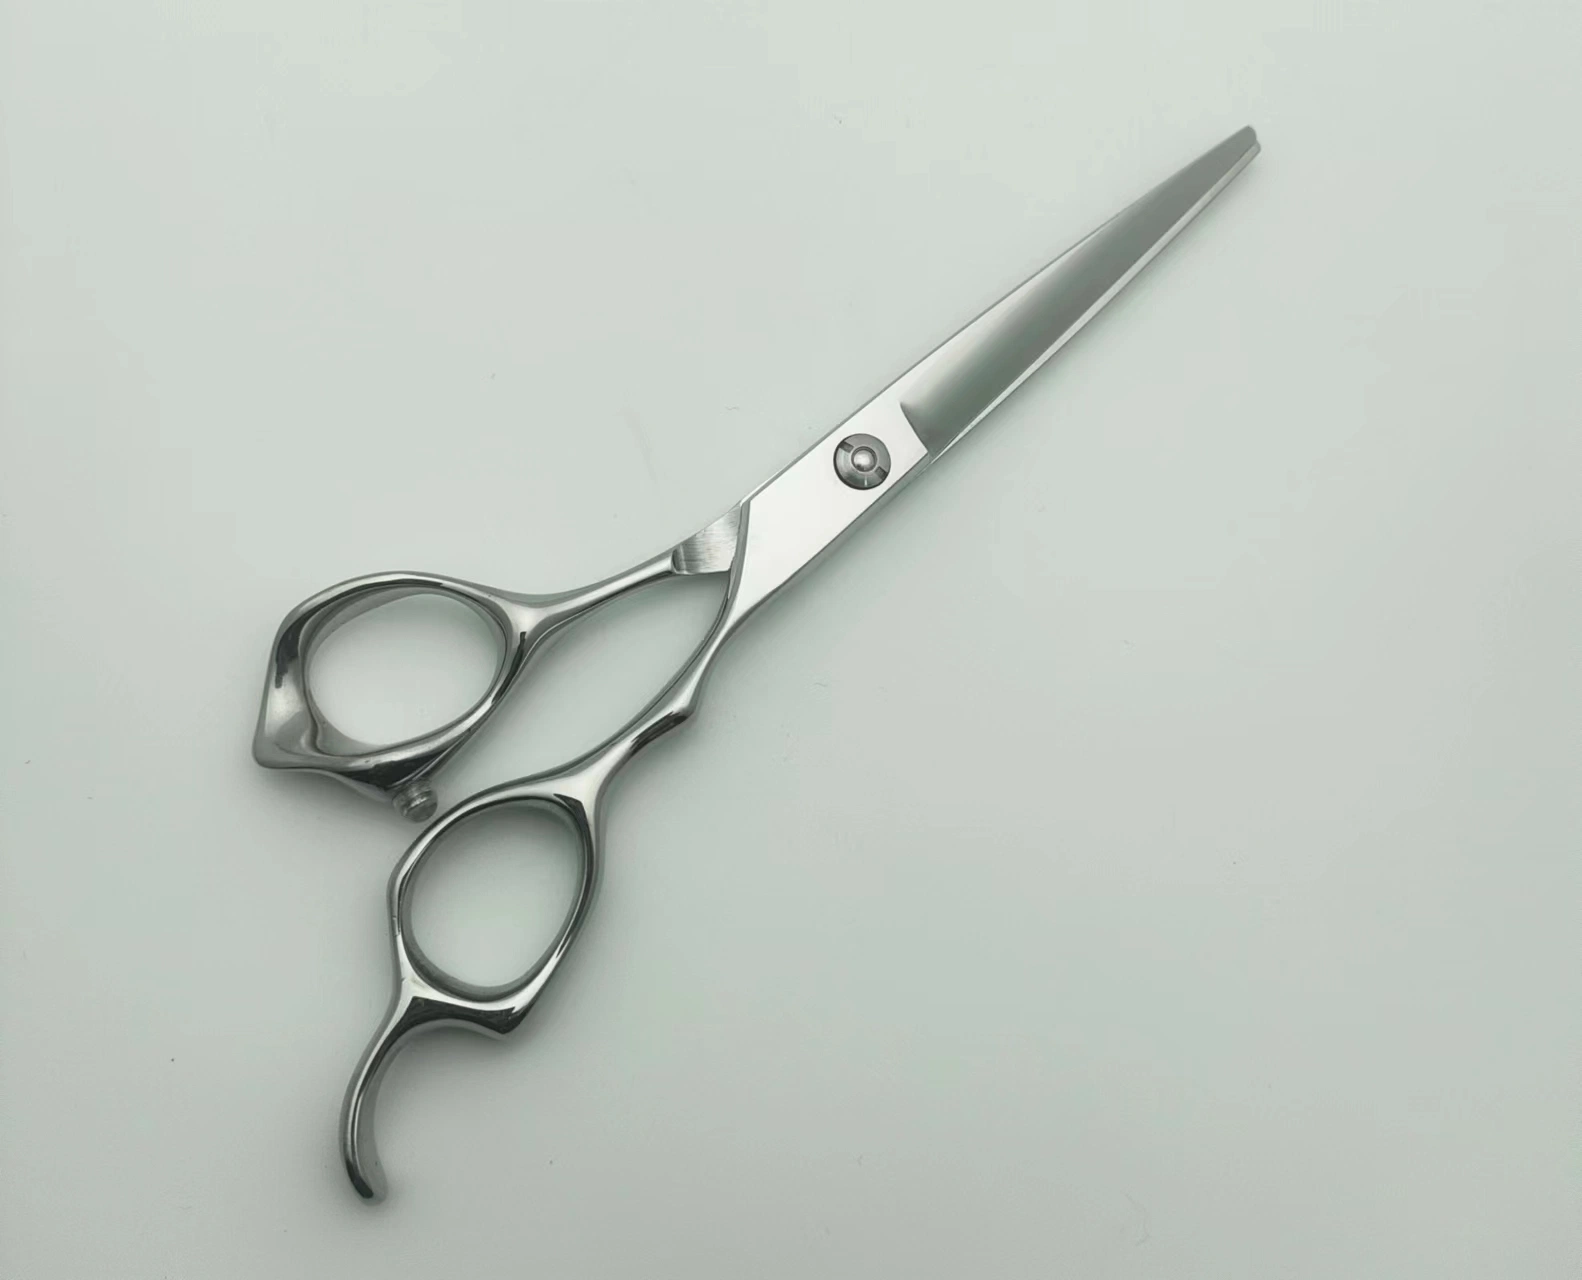 6 "Hair Scissors Barber Scissors High Quality Salon Home Hair Scissors Flat Cut